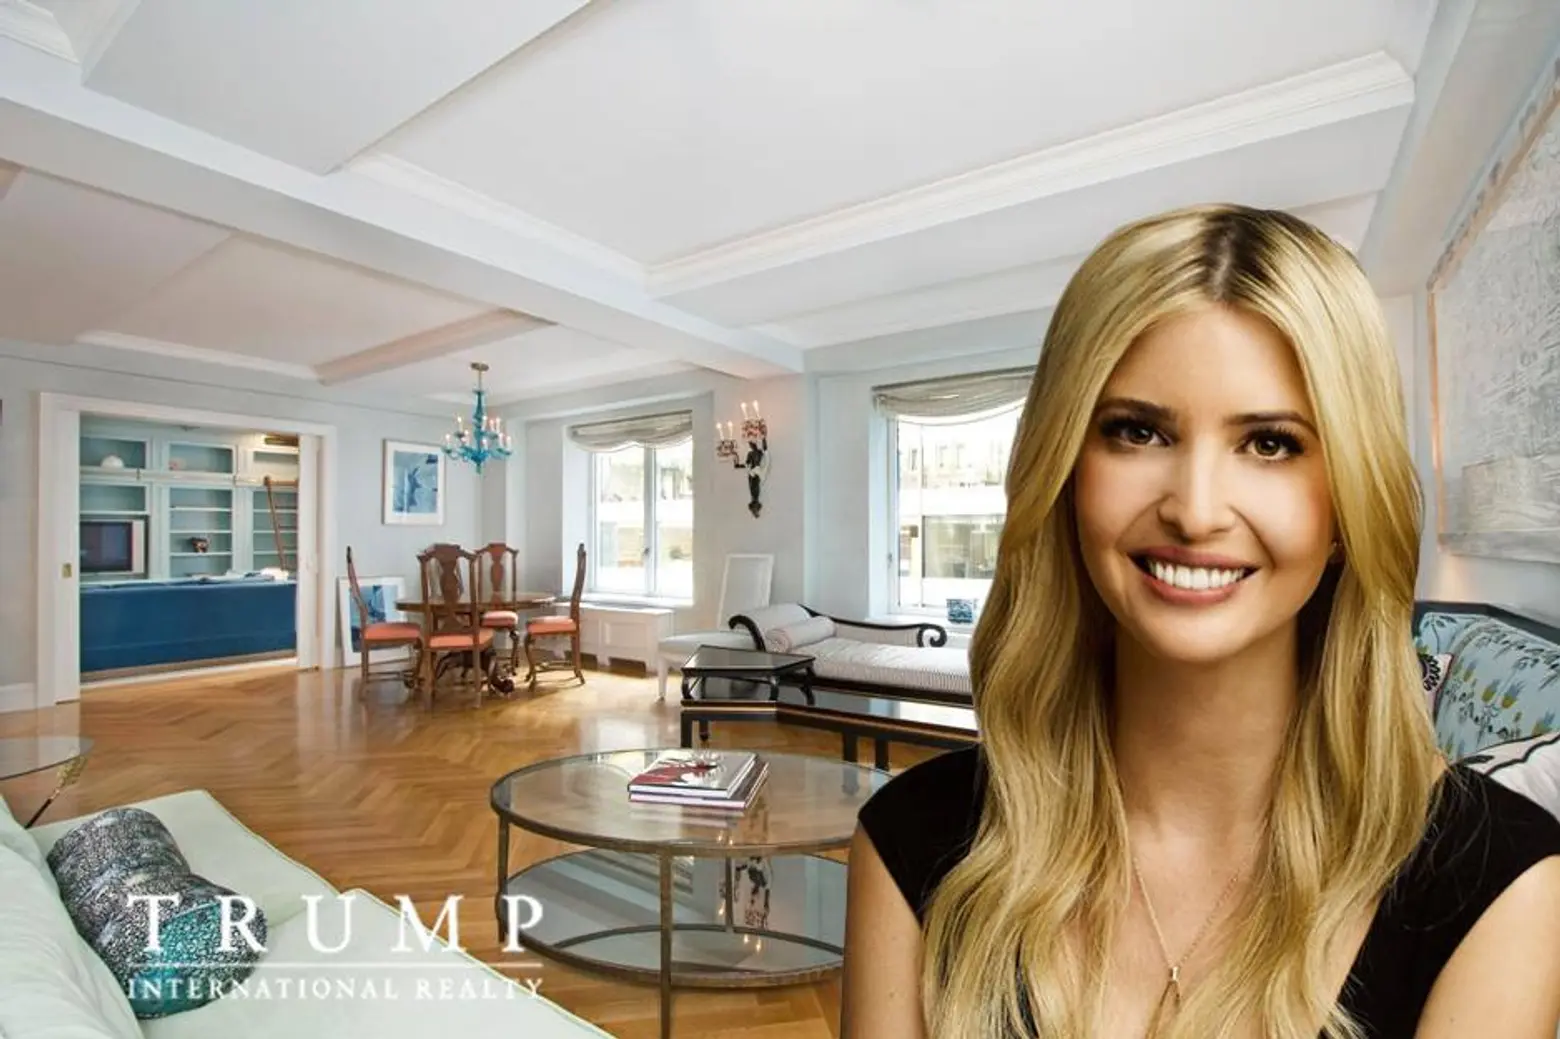 No one wants to rent Ivanka Trump’s Park Avenue apartment